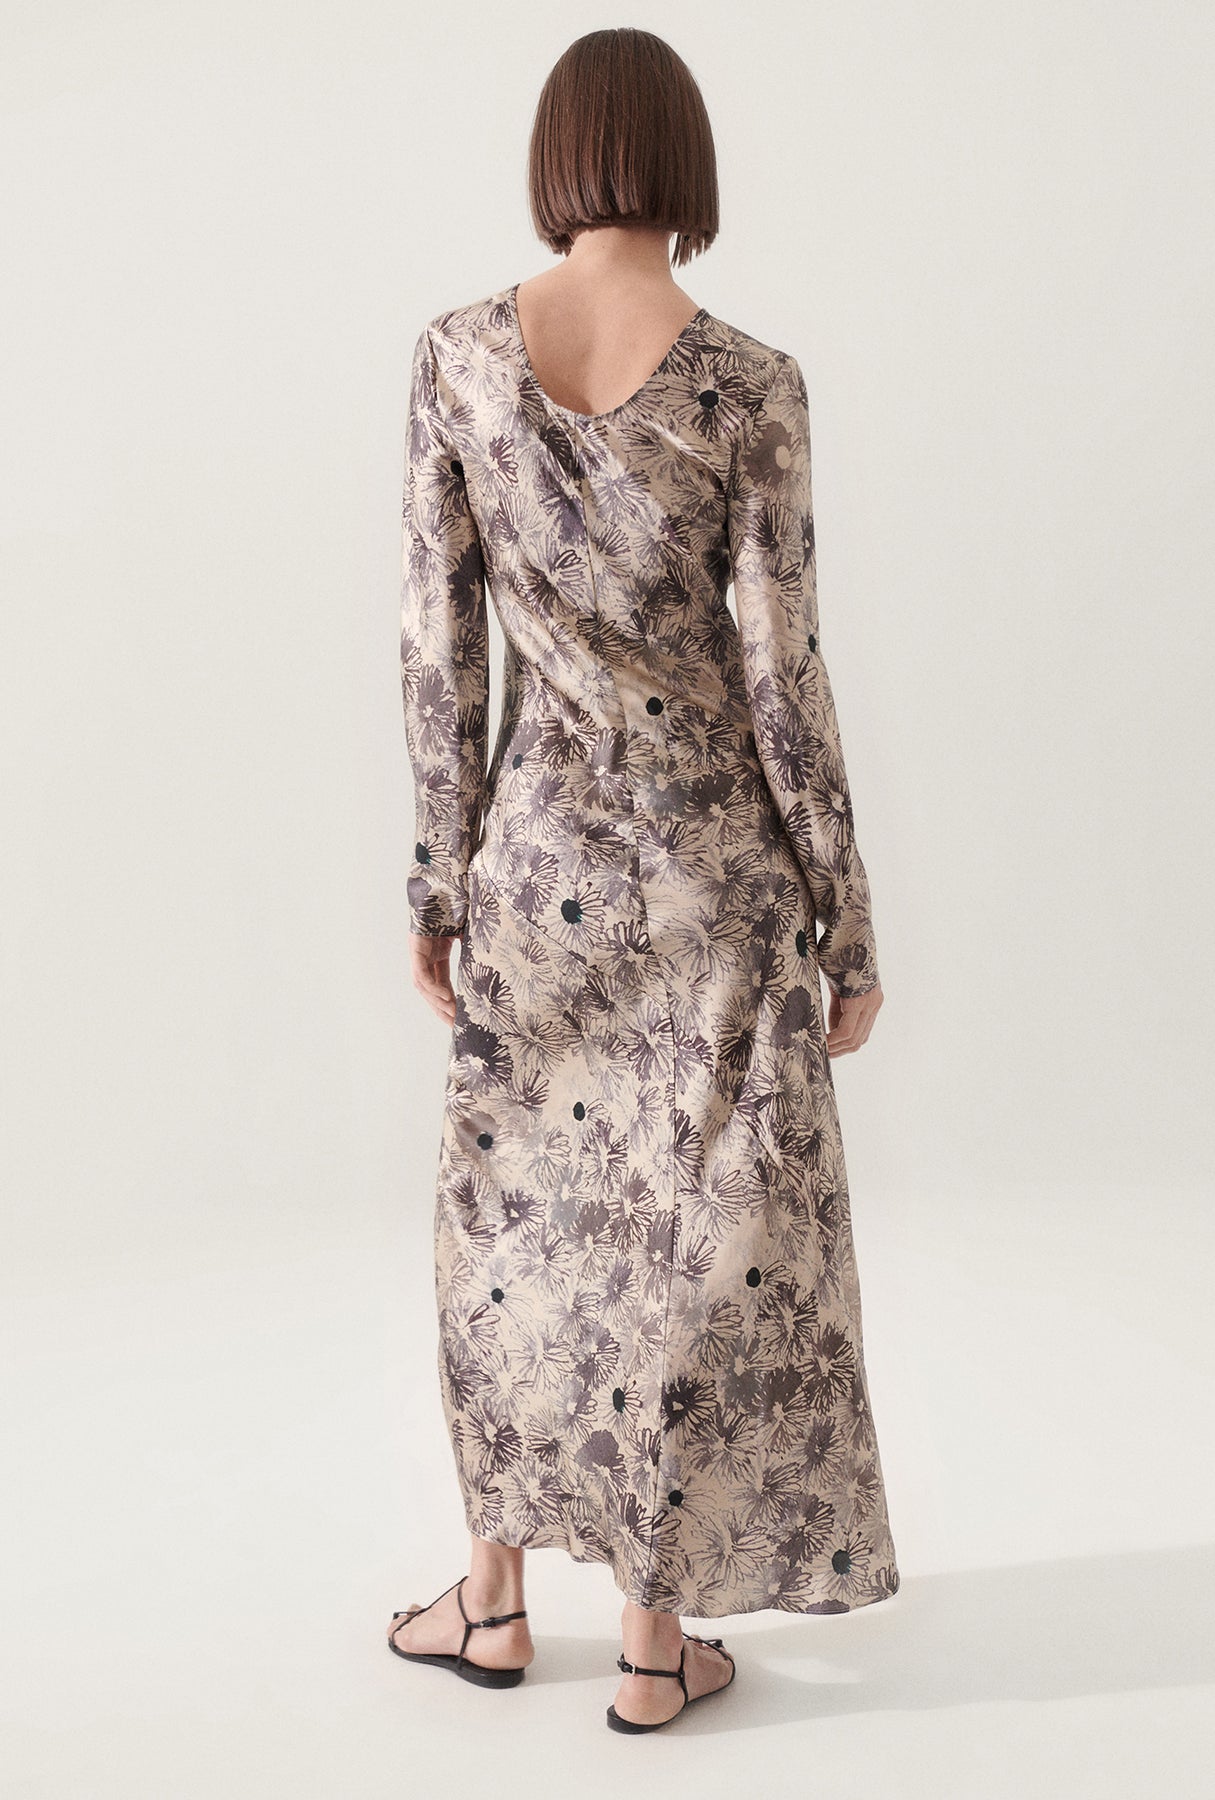 Silk Laundry | Full Sleeve Bias Dress - Aster Floral